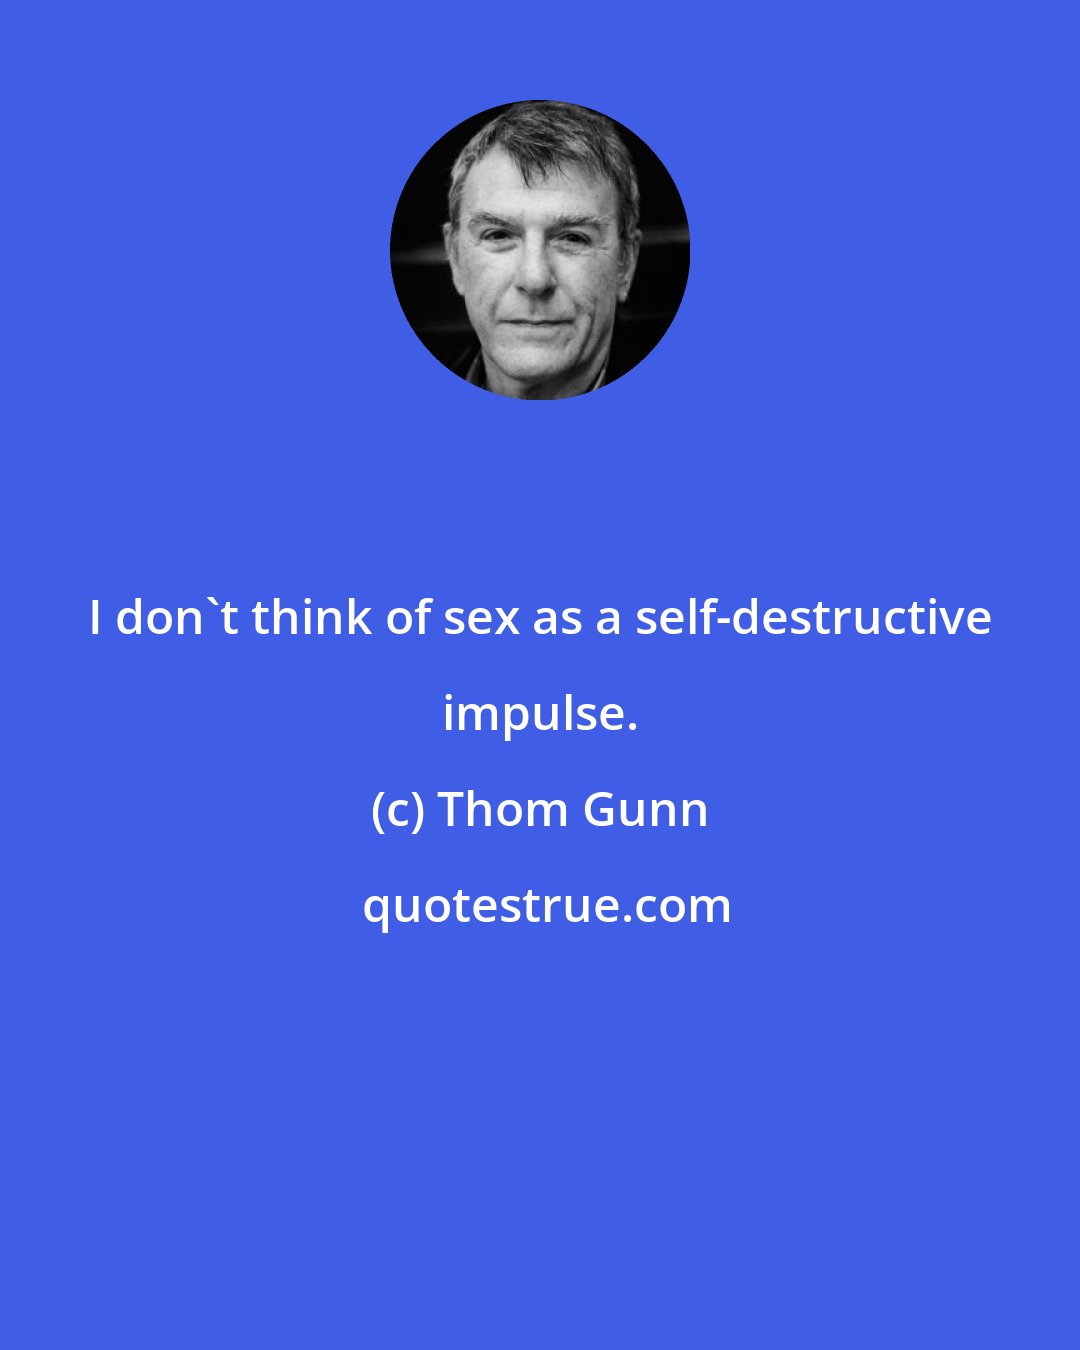 Thom Gunn: I don't think of sex as a self-destructive impulse.